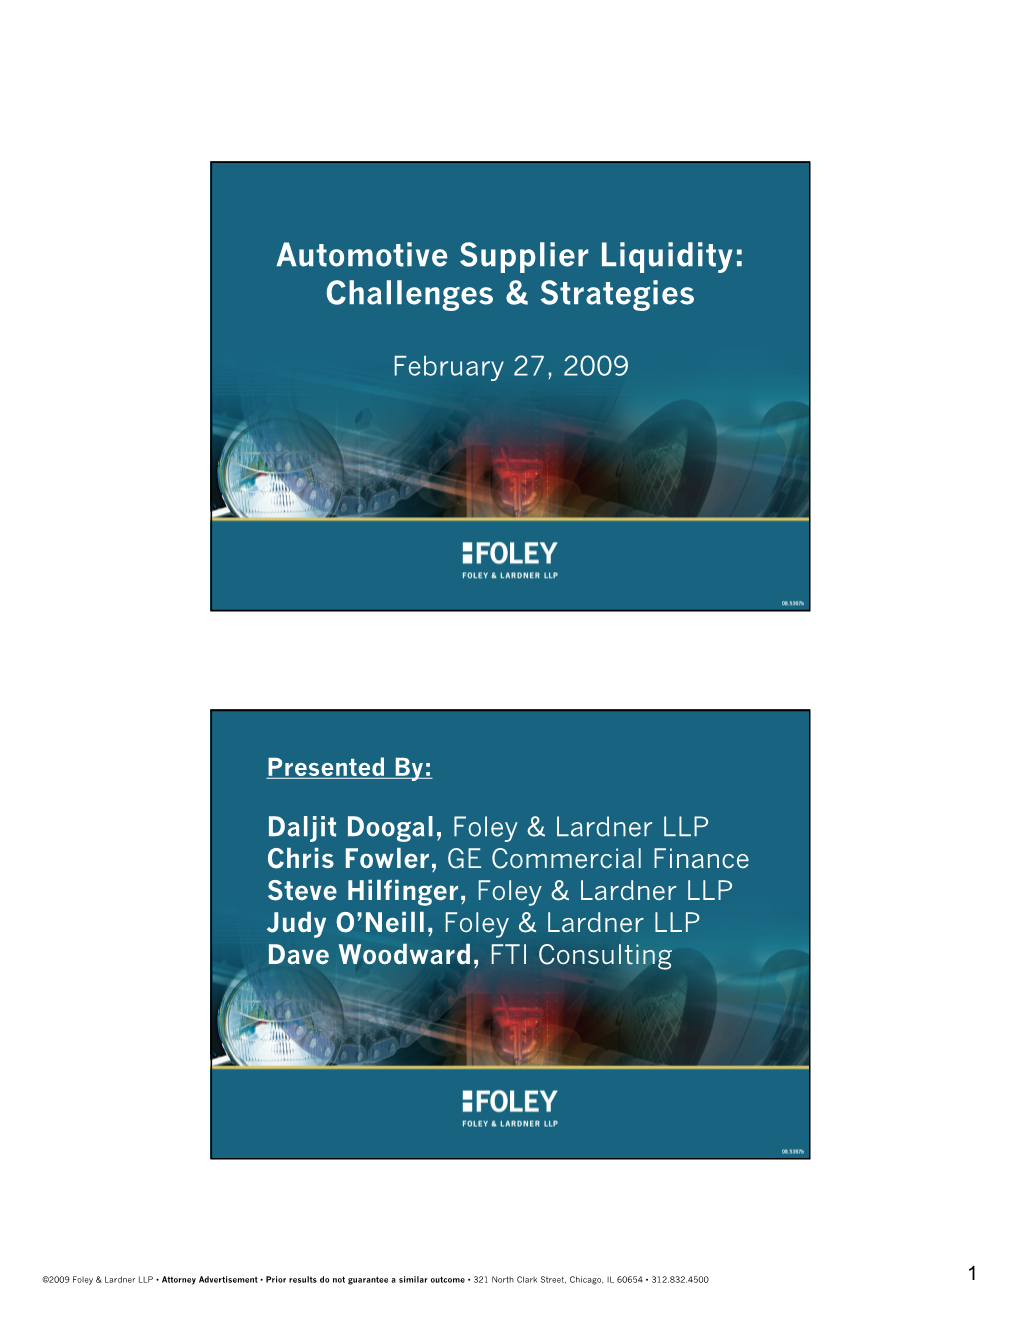 Automotive Supplier Liquidity: Challenges & Strategies